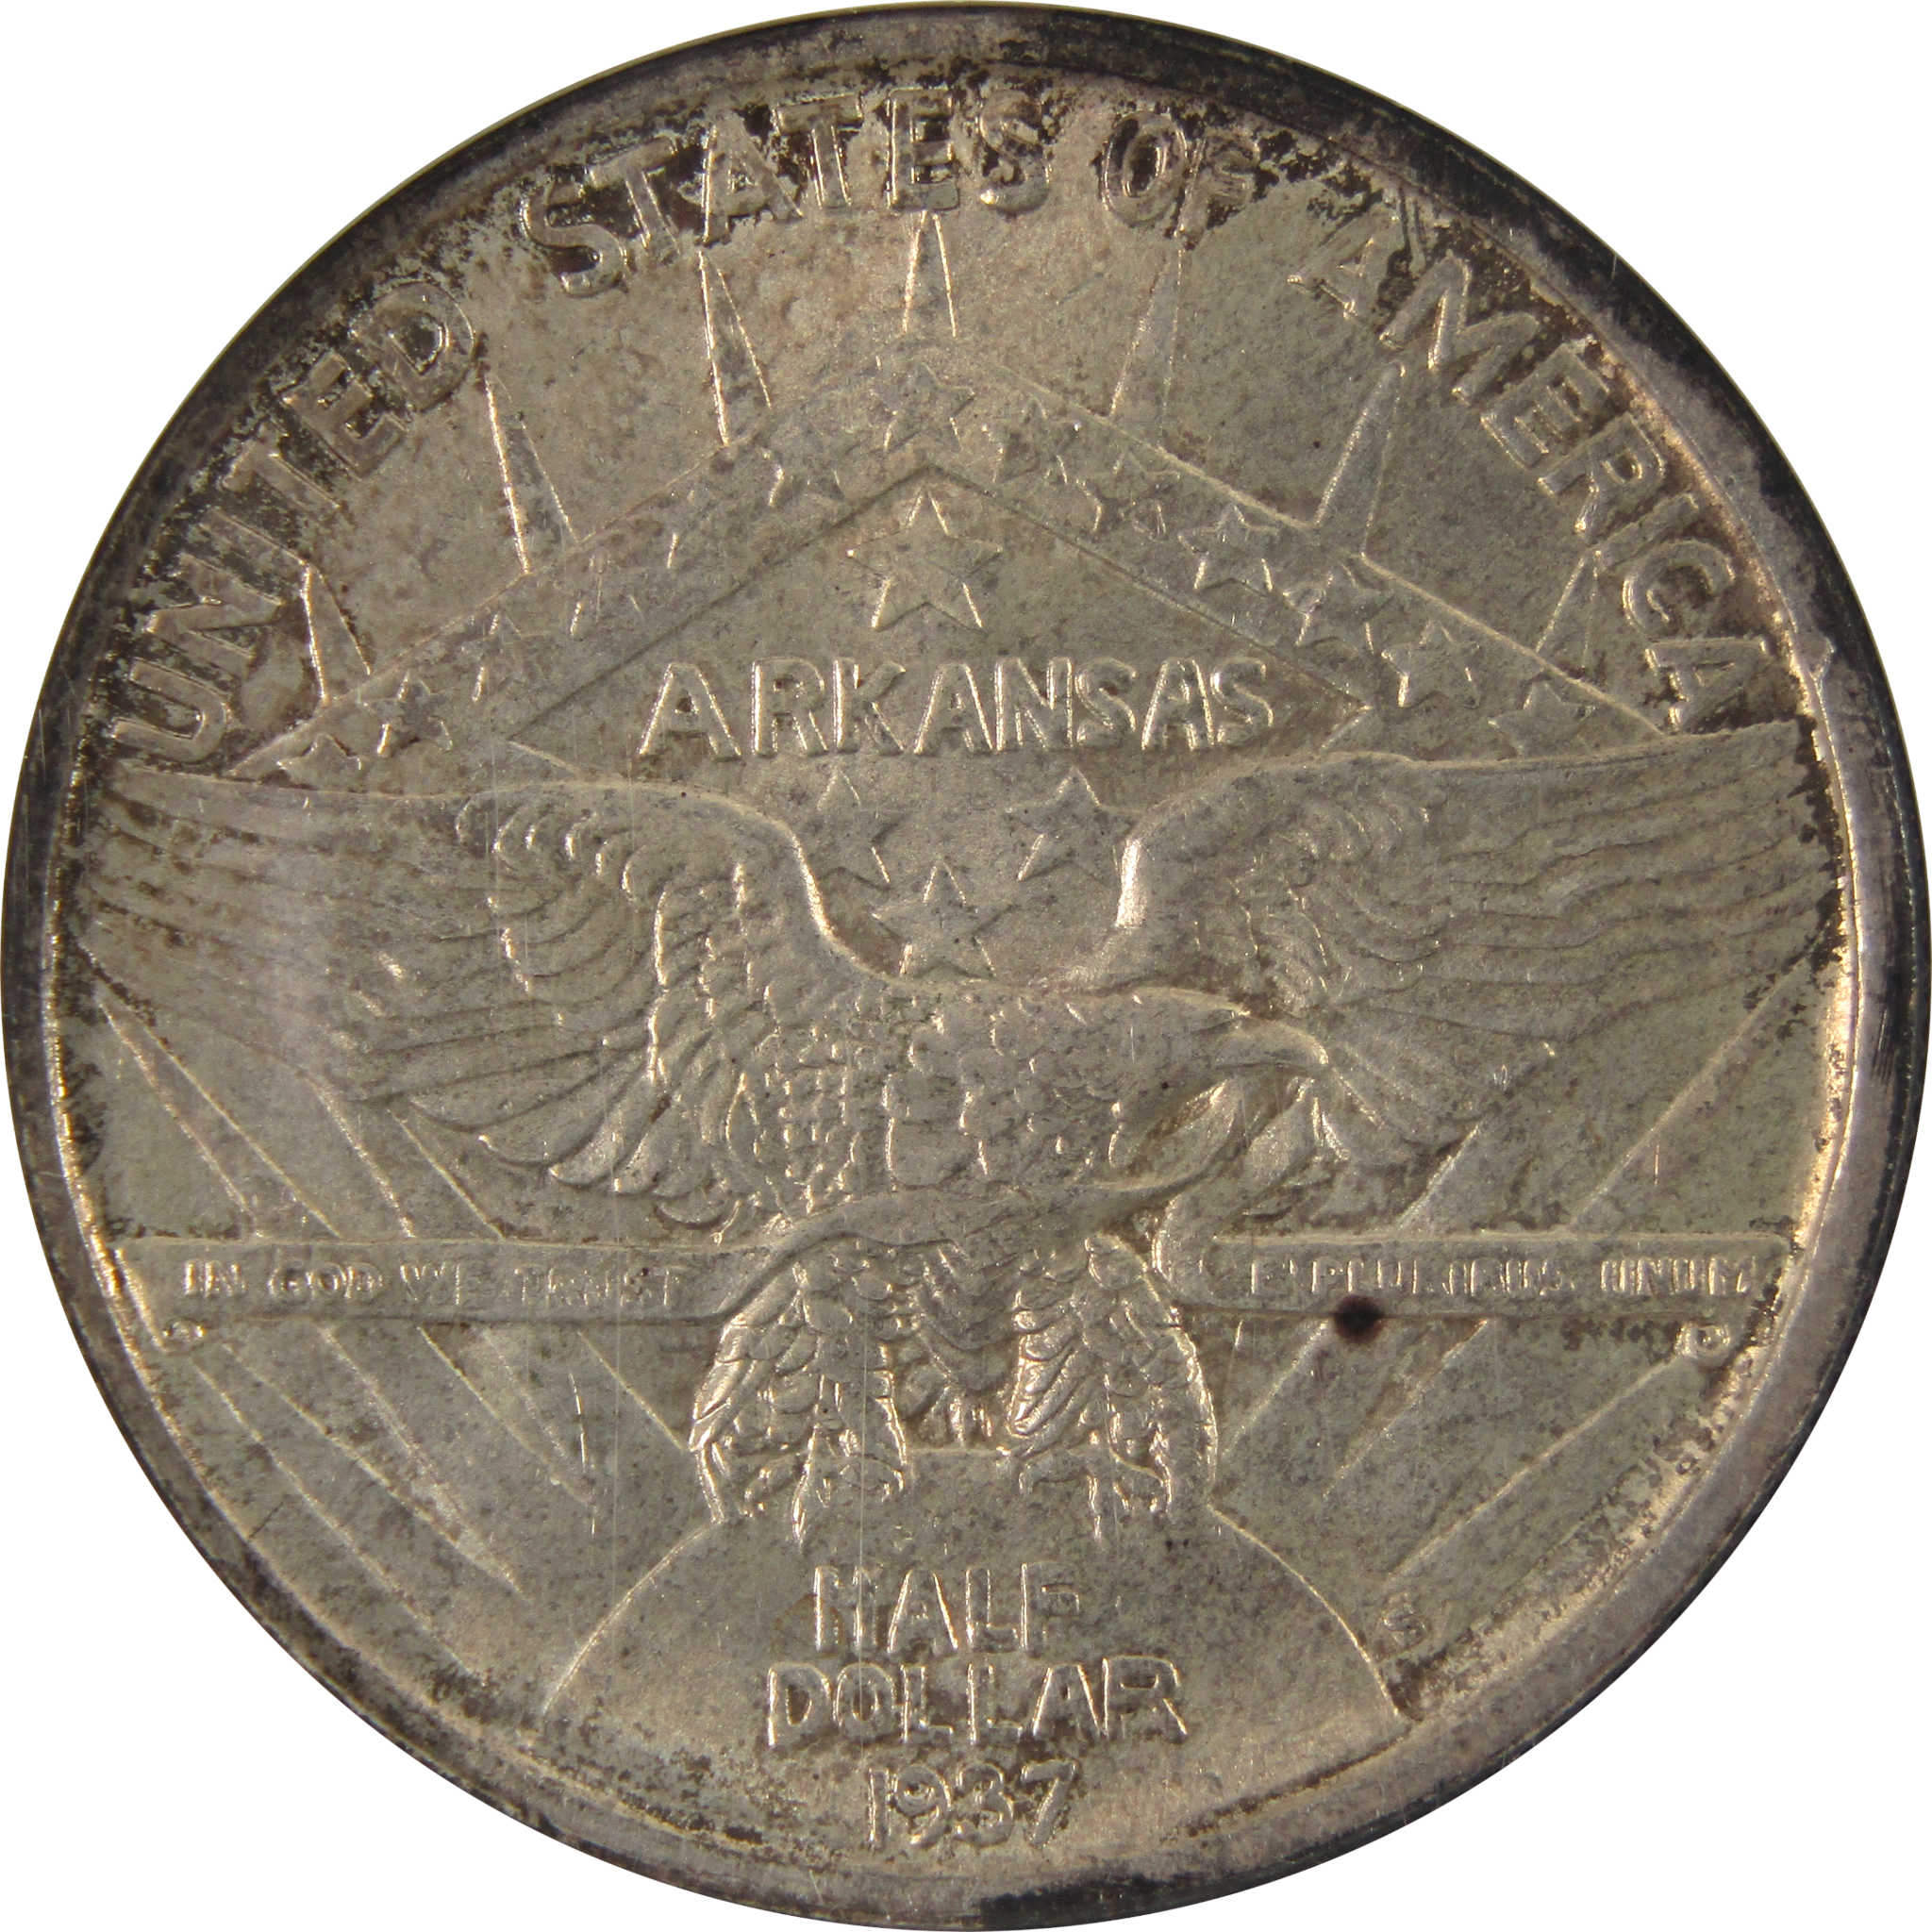 Arkansas Centennial Commemorative 1937 S MS 65 NGC Silver SKU:I9882